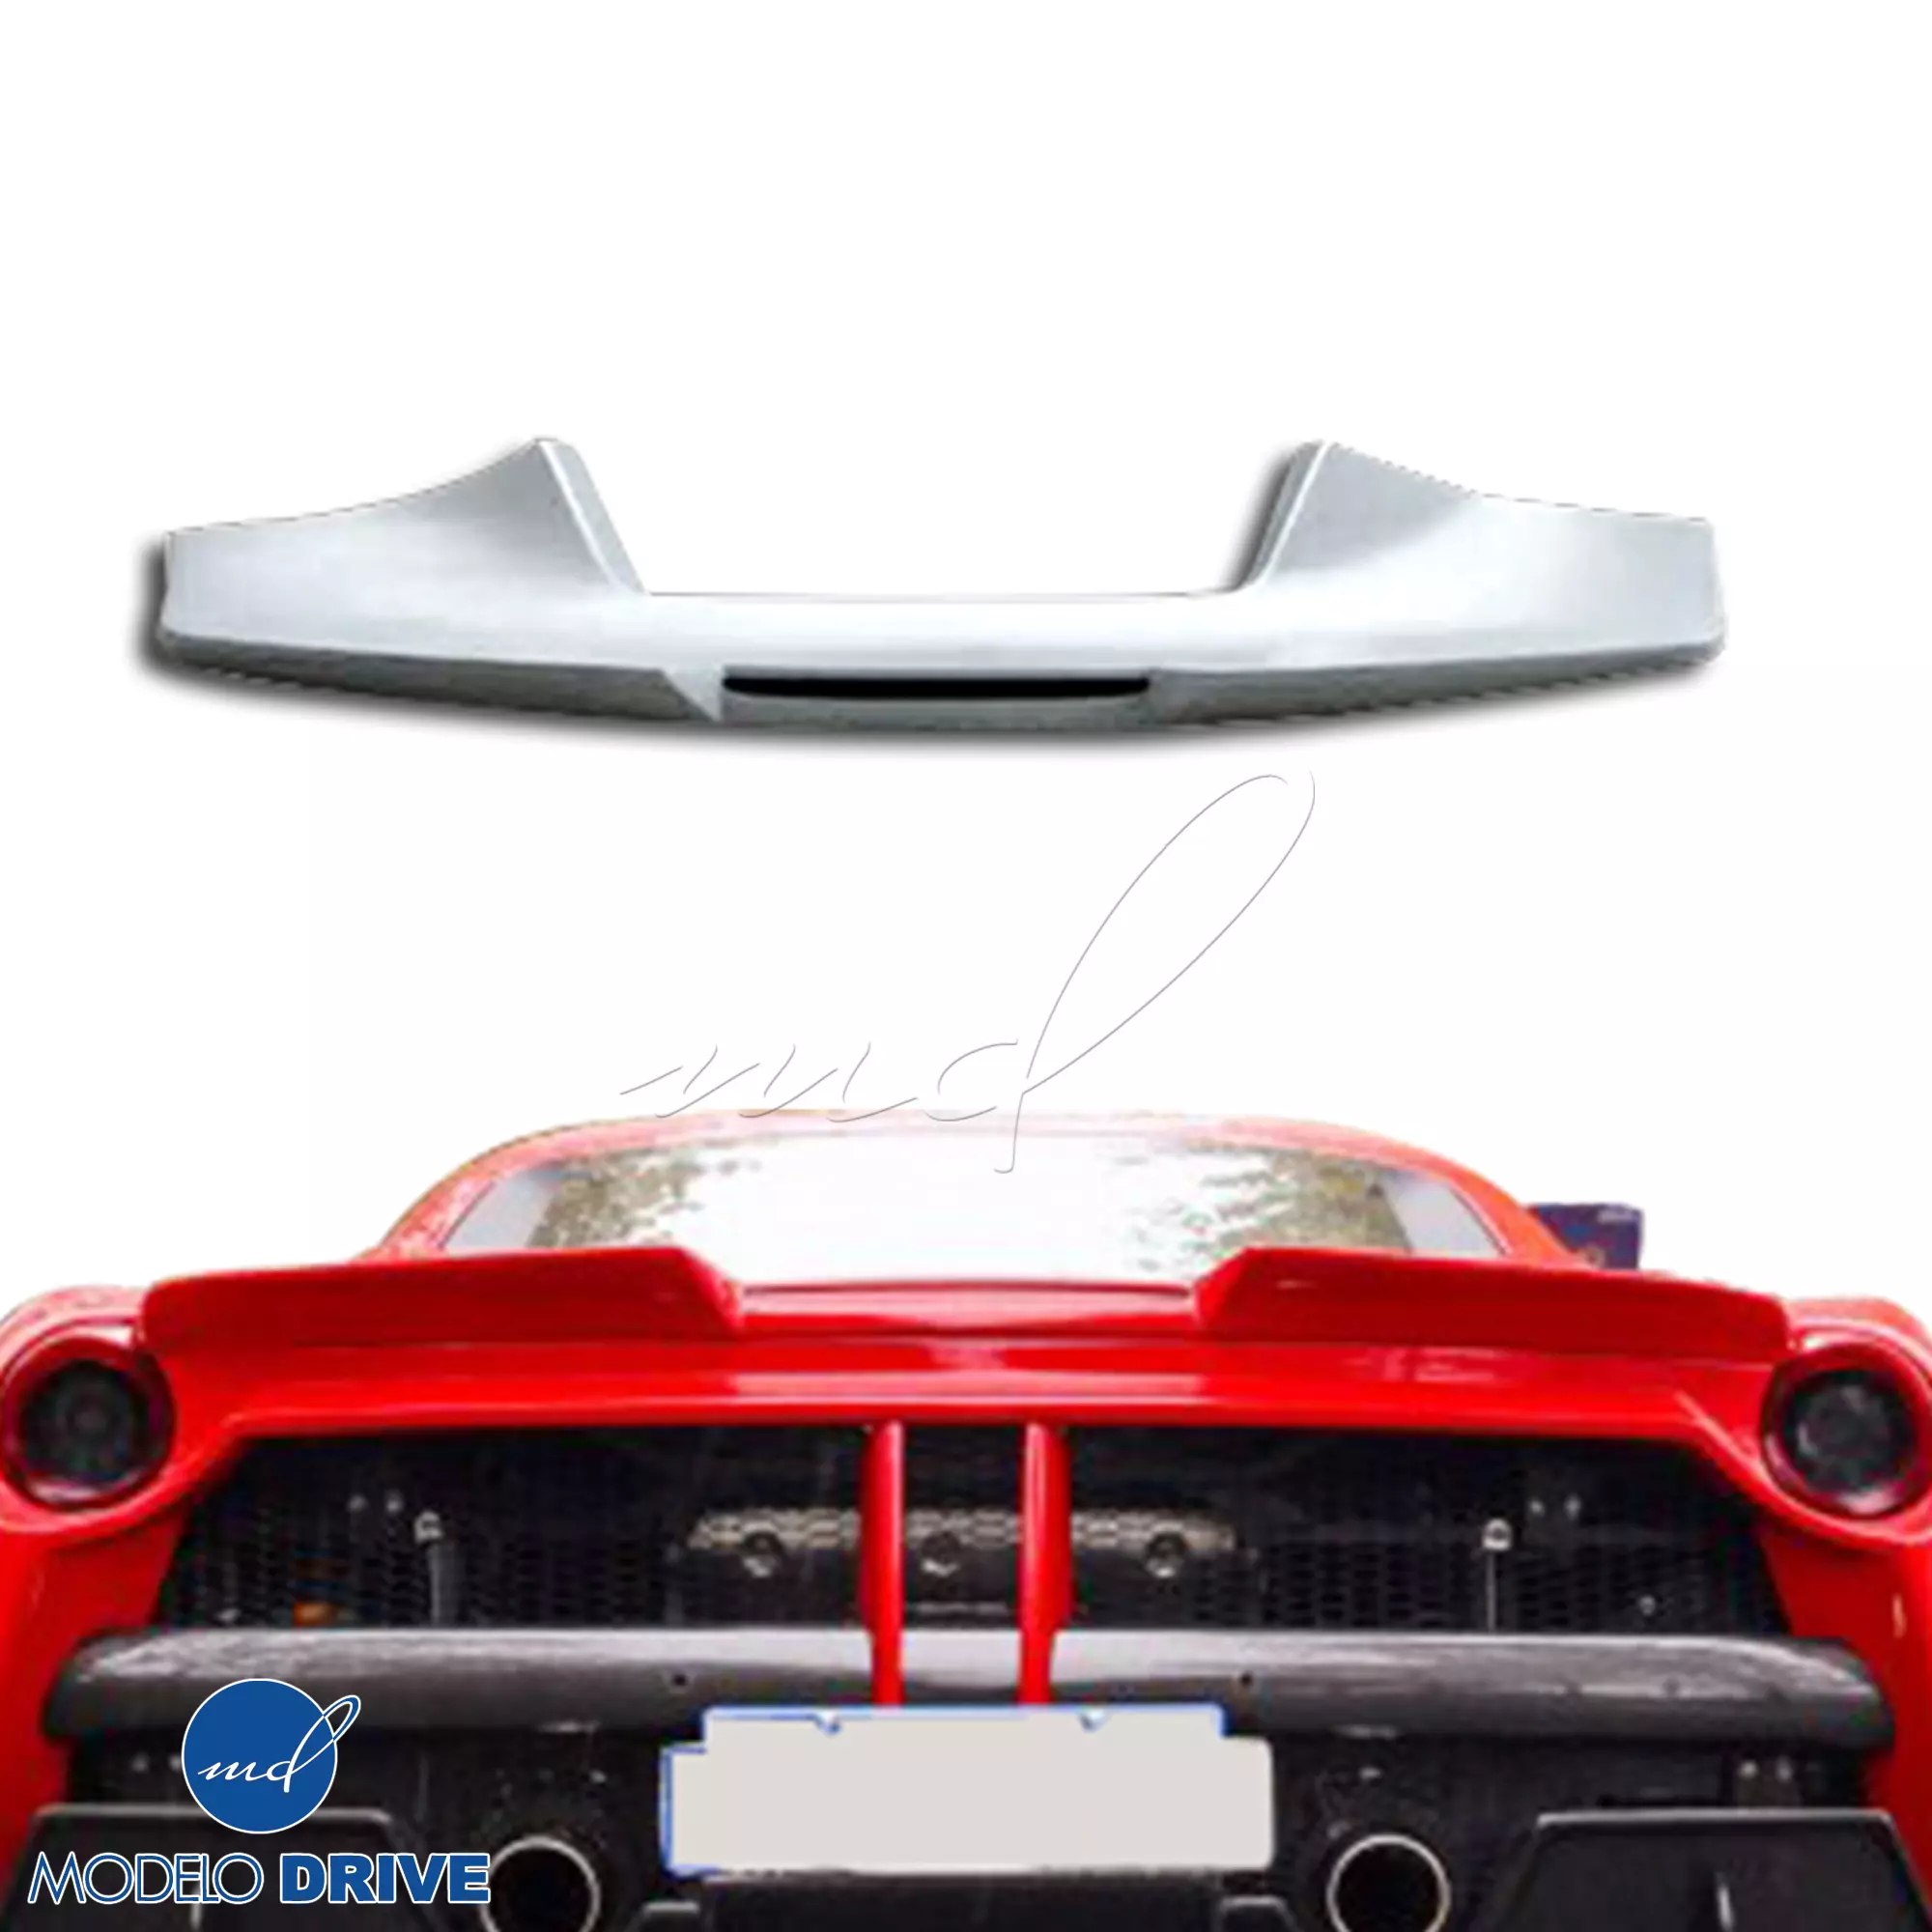 ModeloDrive Partial Carbon Fiber MDES Body Kit > Ferrari 488 GTB F142M 2016-2019 - Image 55